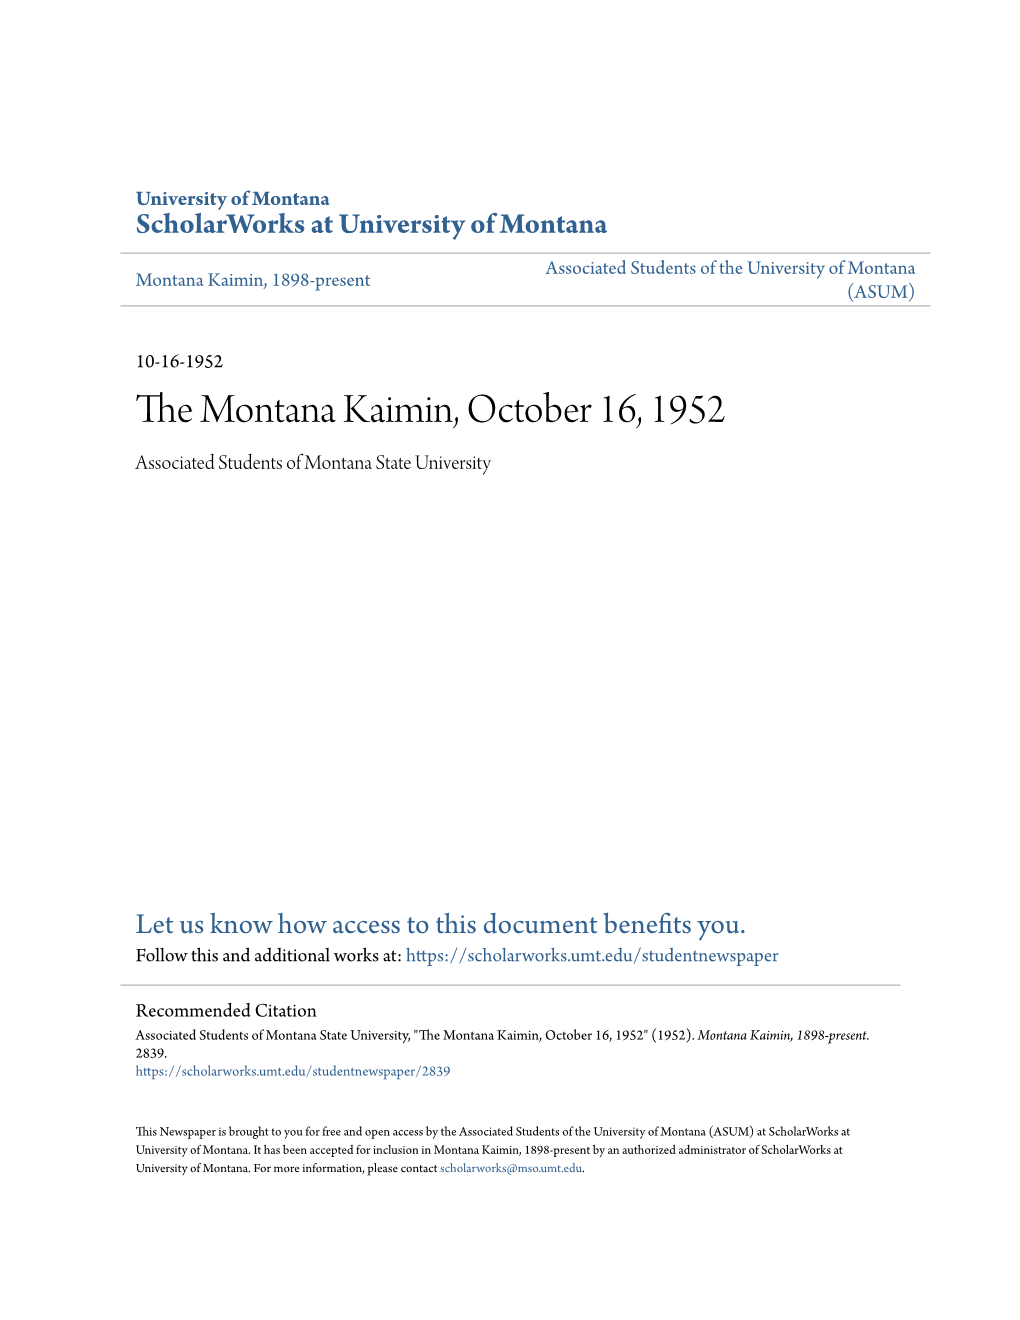 The Montana Kaimin, October 16, 1952